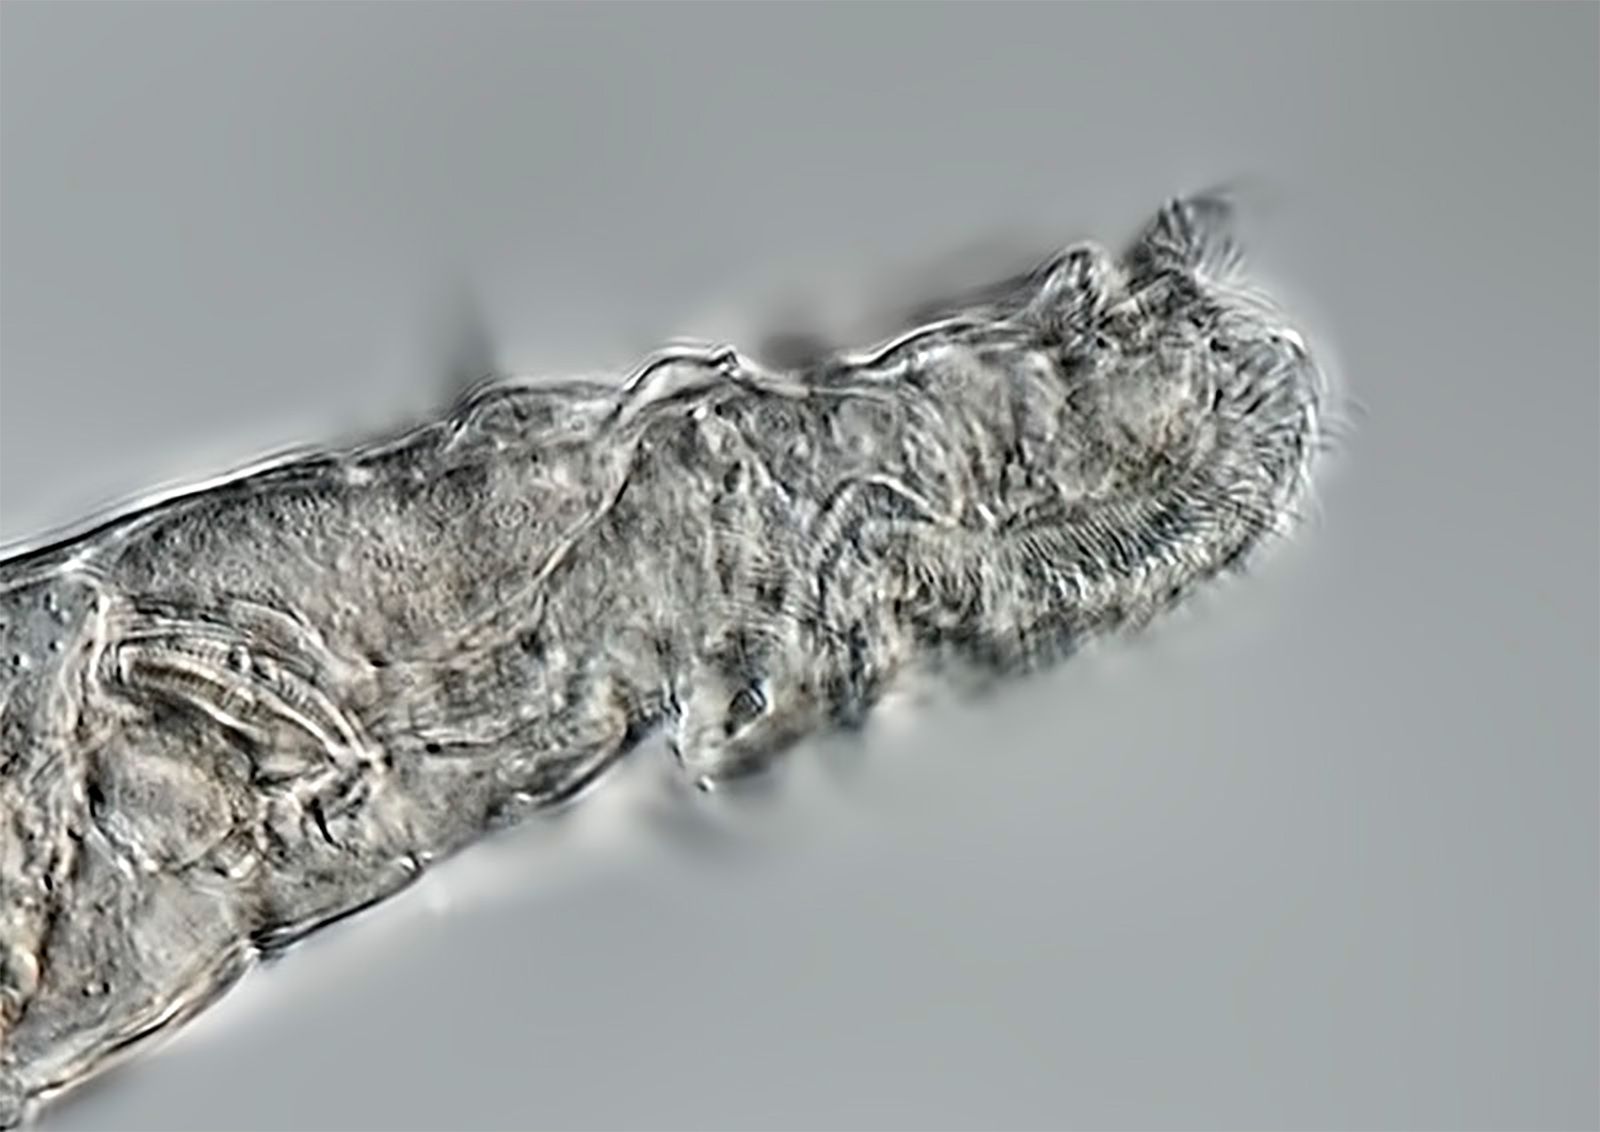 rotifer under a microscope